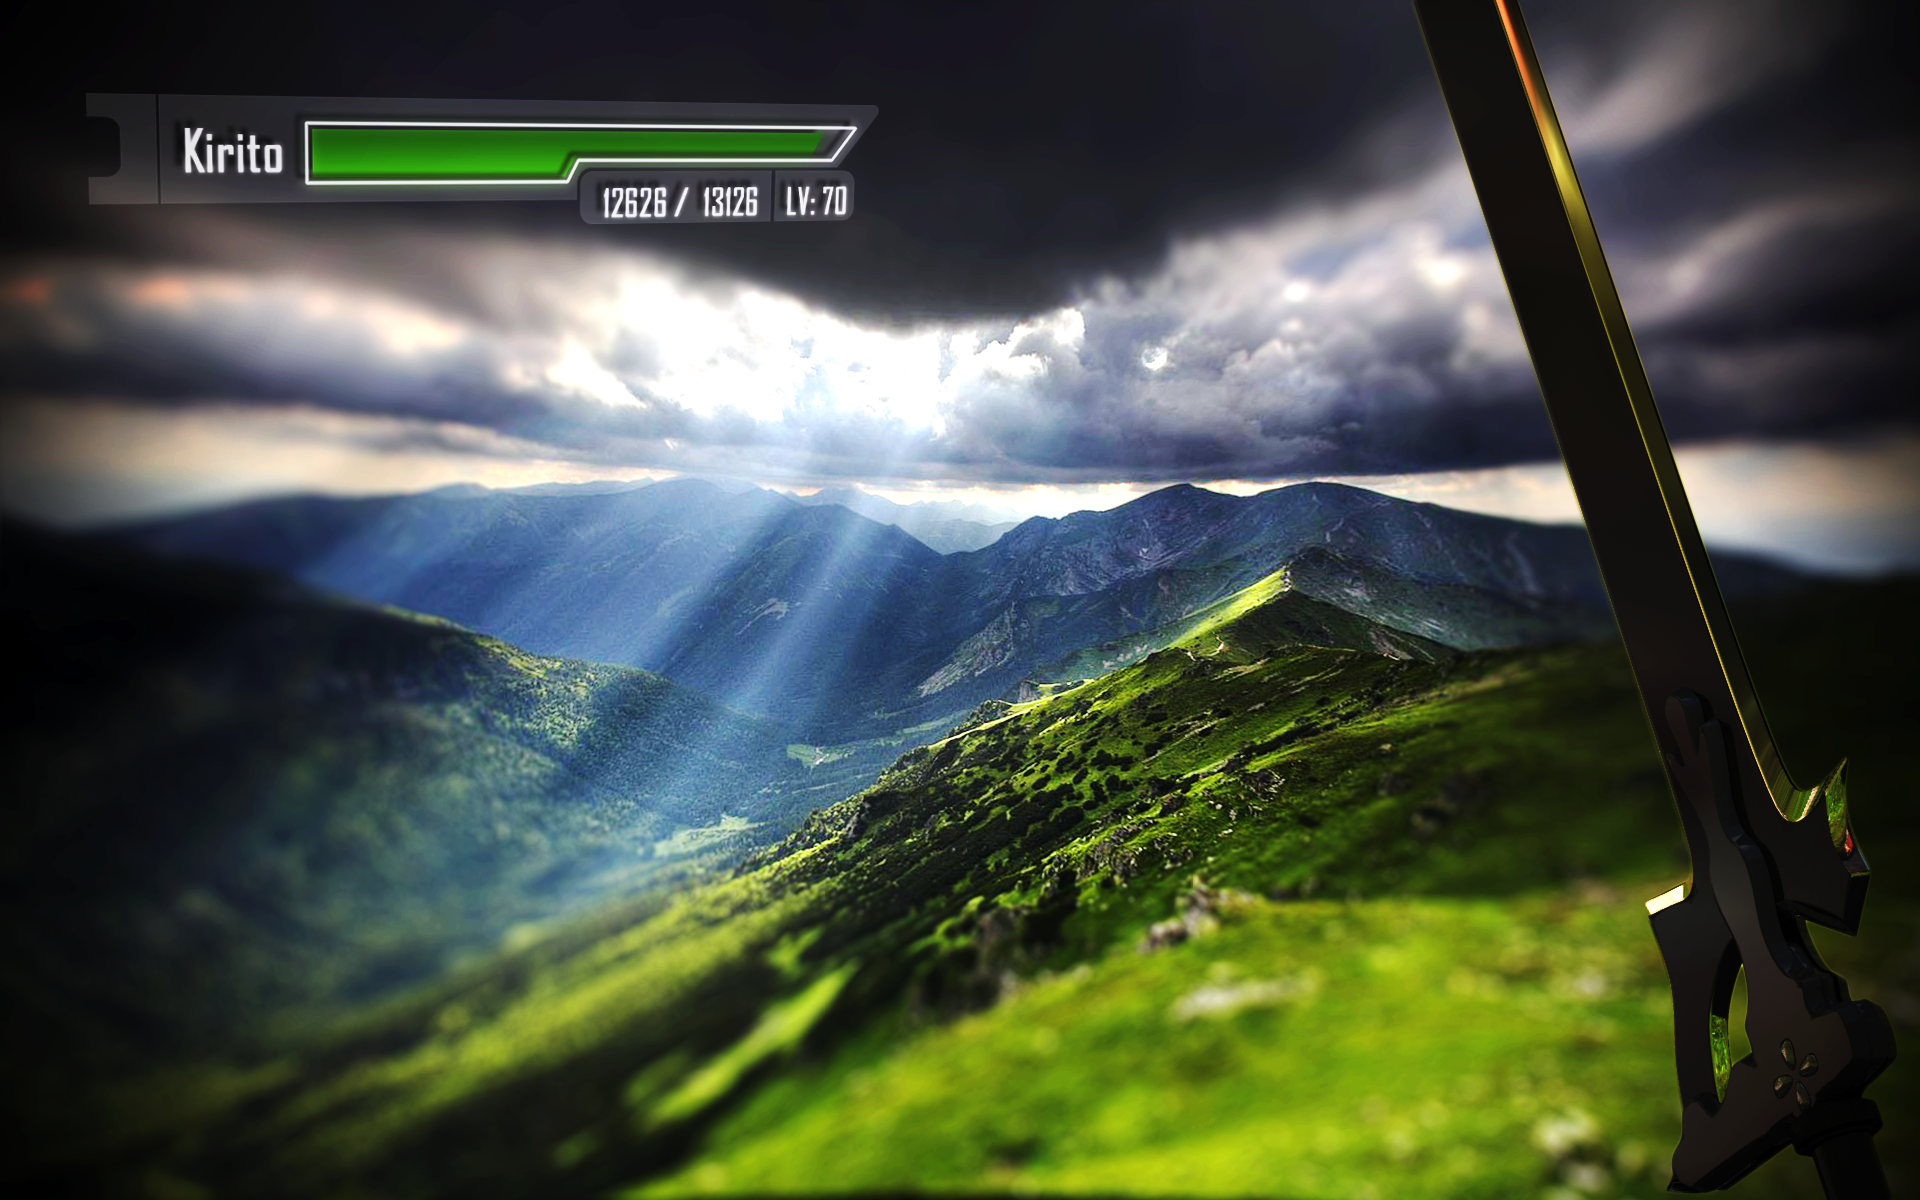 Sword Art Online HD Wallpaper Background Image Id